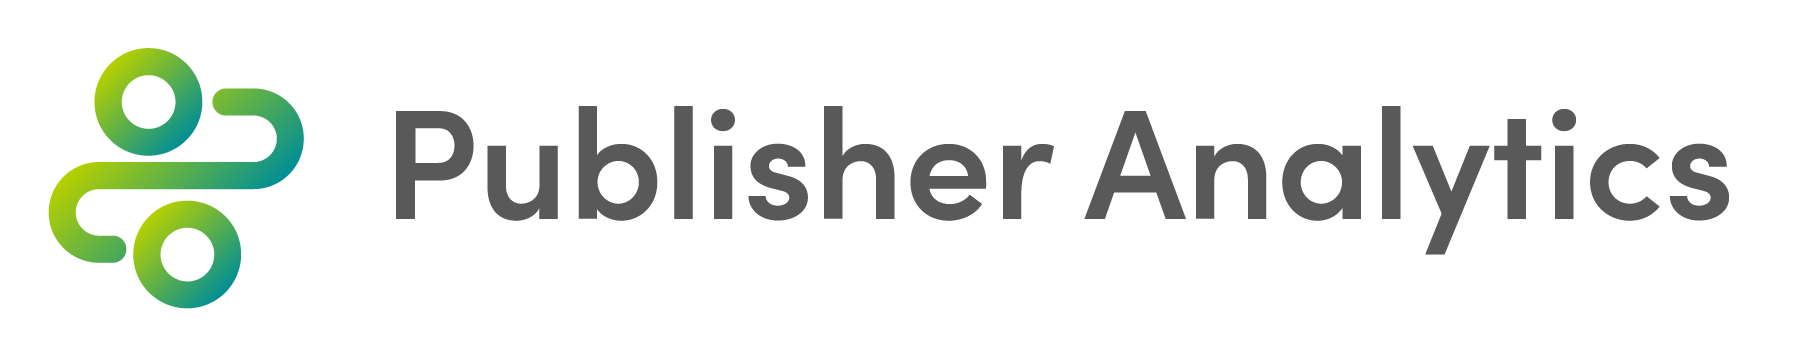 Publisher Analytics Logo